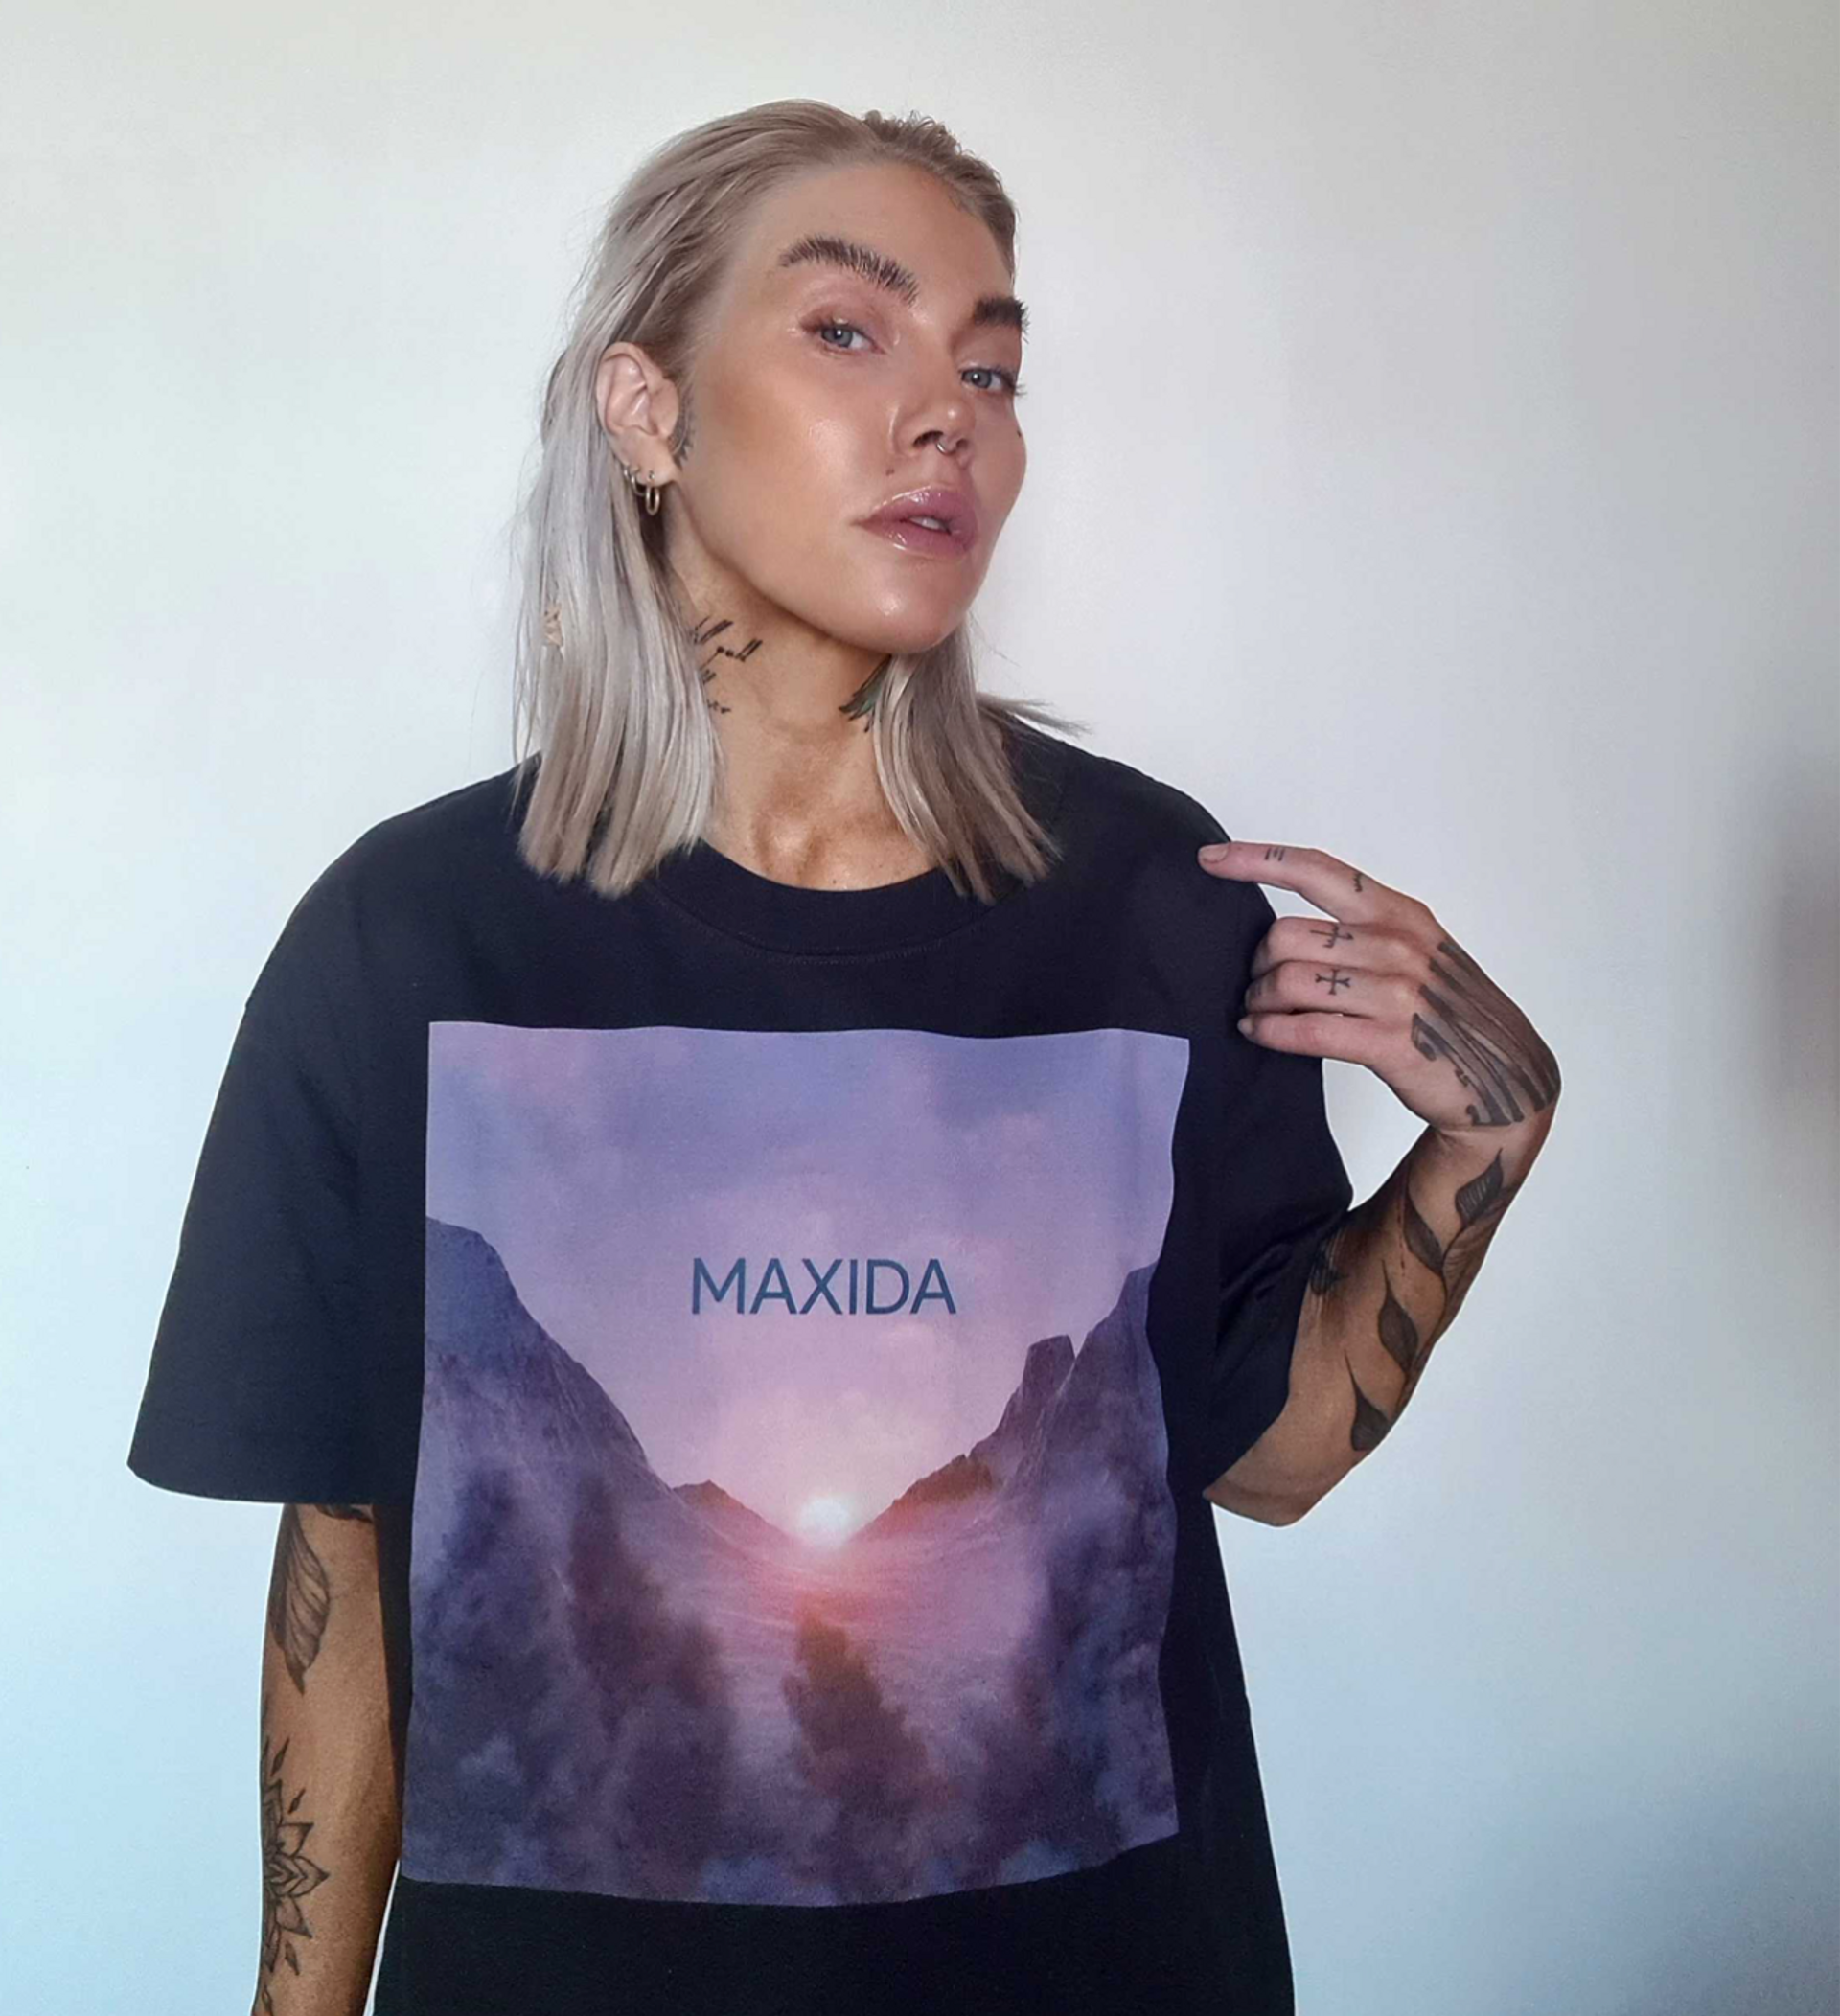 Musician, actress and activist, printed t-shirt